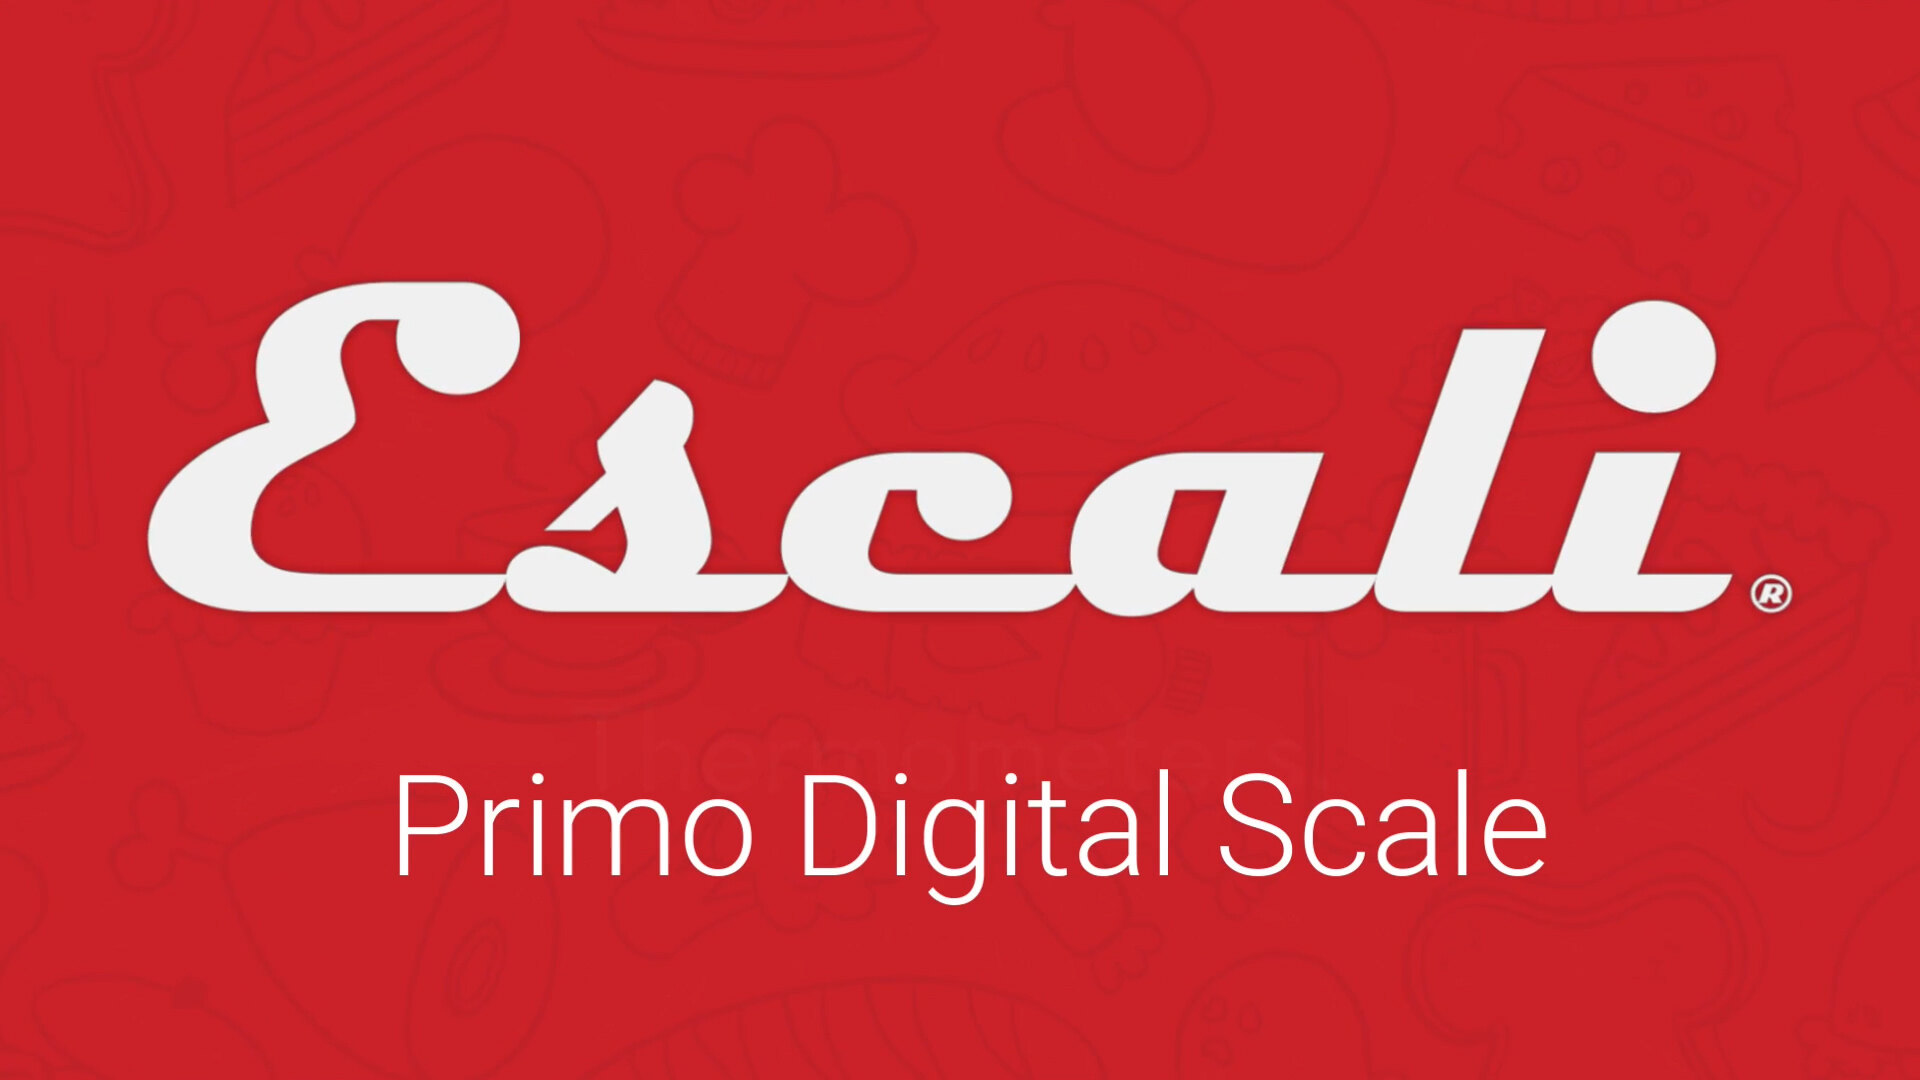 Escali Primo Digital Food Scale 11 lb capacity Various Colors FREE